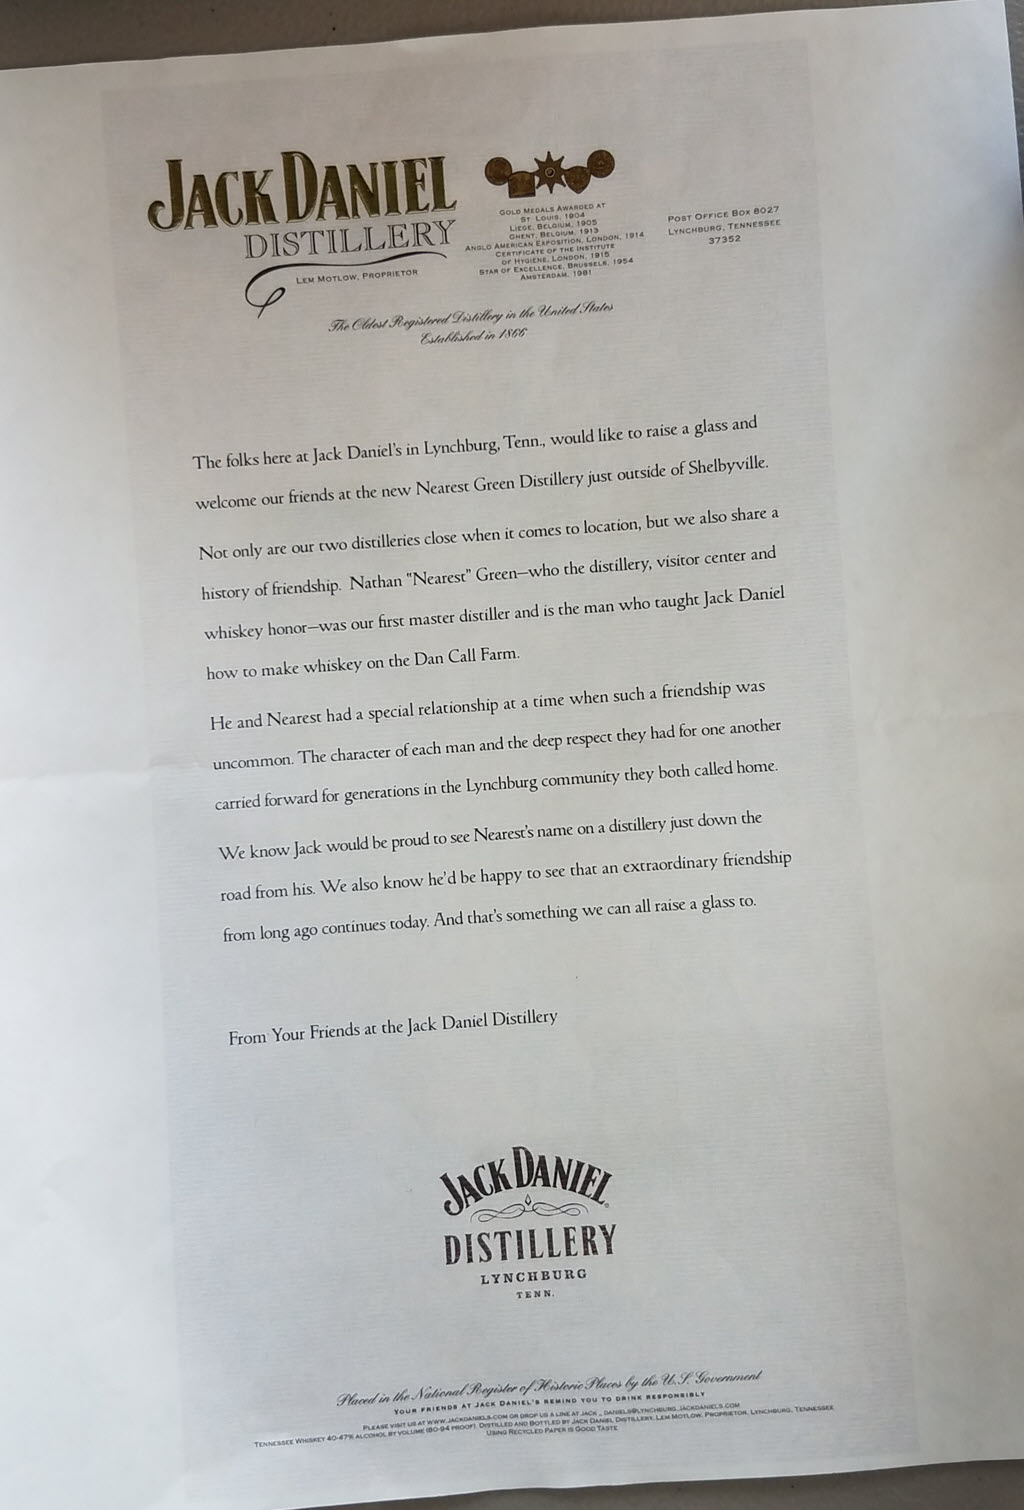 Jack Daniel Distillery - Jack Daniel's Love Letter to Nearest Green, September 5th, 2019